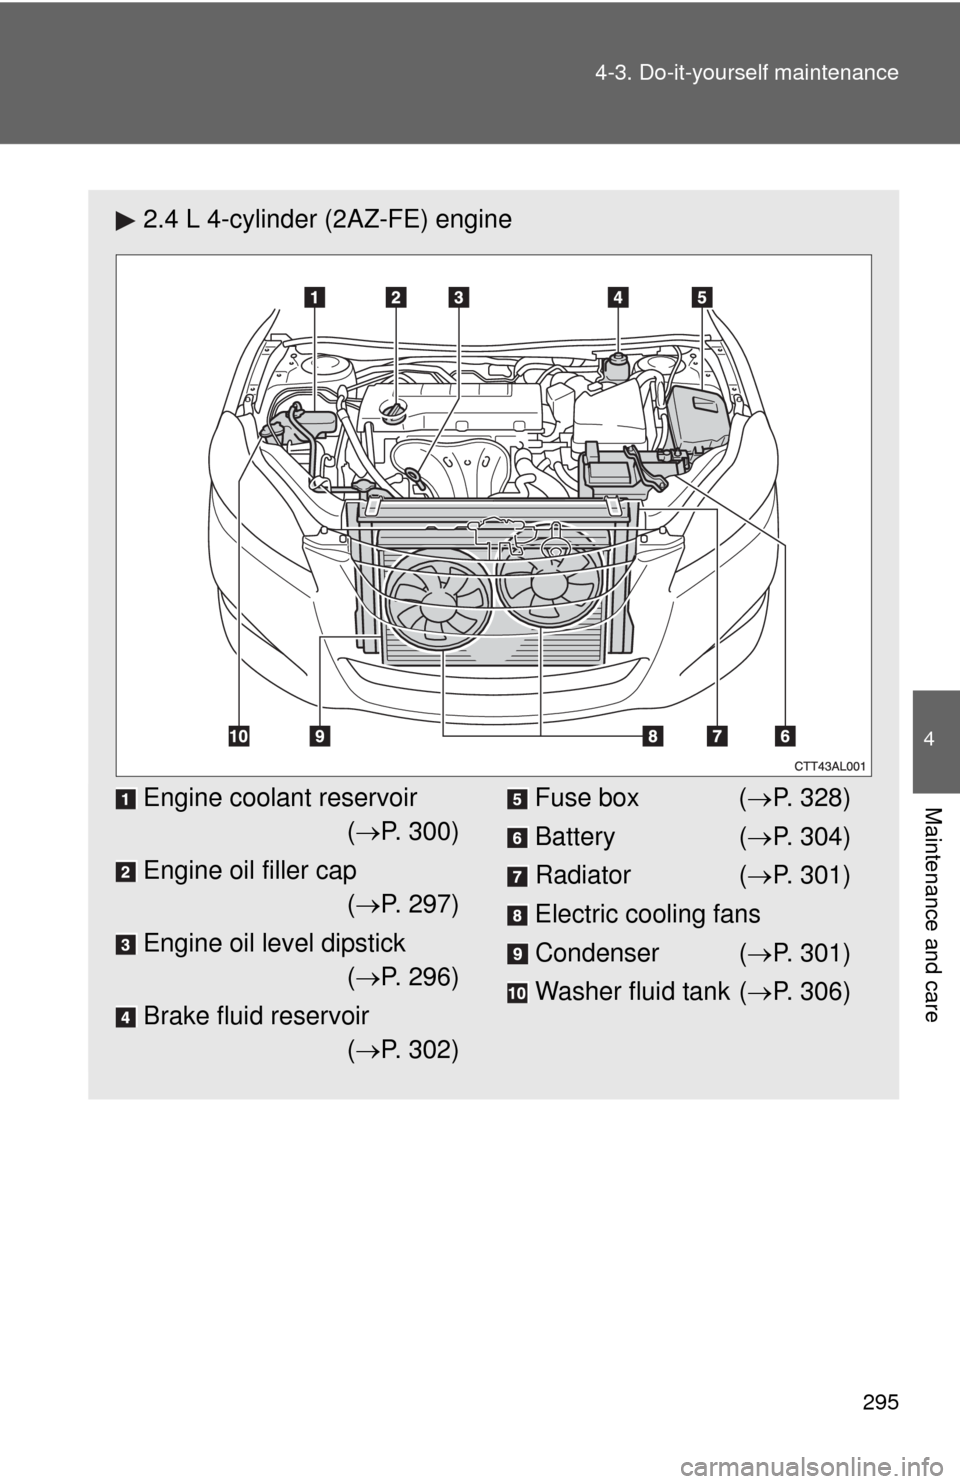 TOYOTA MATRIX 2010 E140 / 2.G Owners Manual 295 4-3. Do-it-yourself maintenance
4
Maintenance and care
2.4 L 4-cylinder (2AZ-FE) engine
Engine coolant reservoir
(P. 300)
Engine oil filler cap
(P. 297)
Engine oil level dipstick
(P. 296)